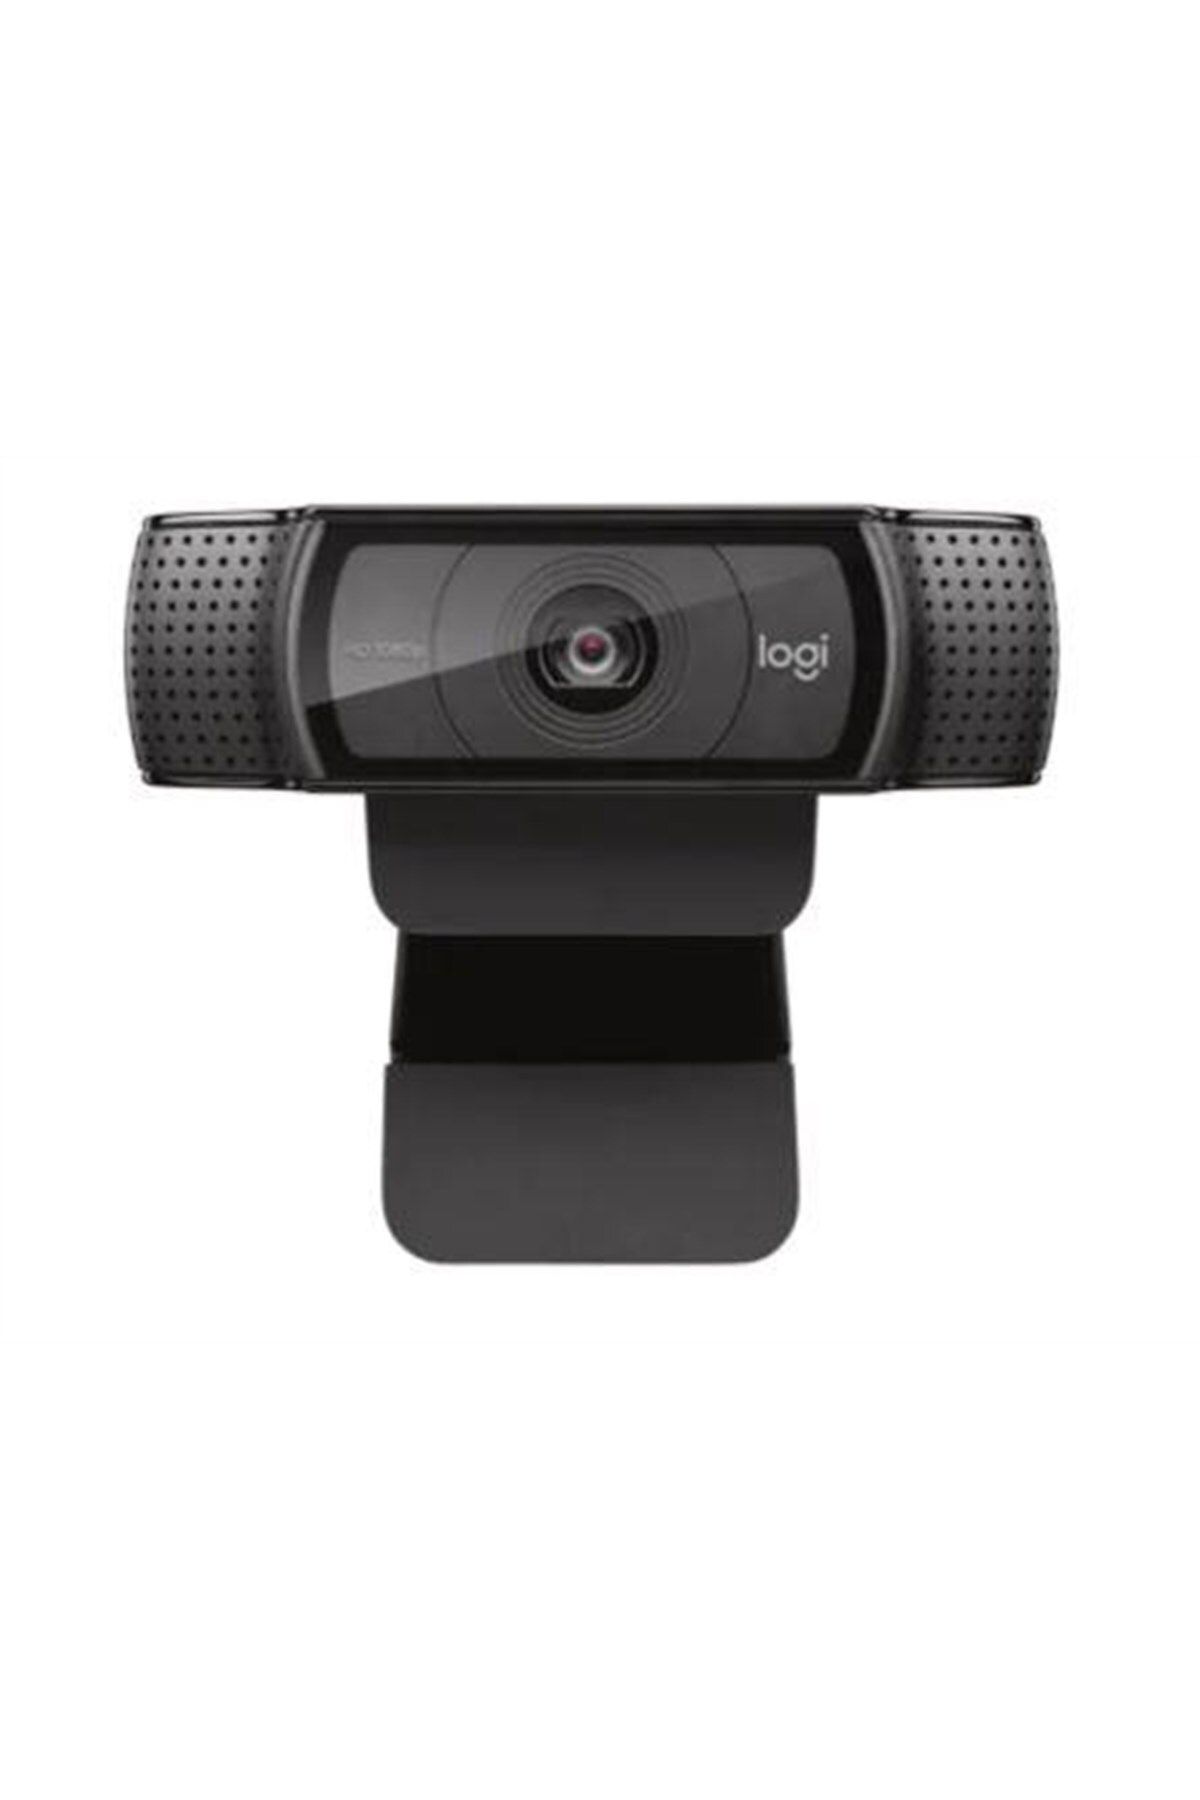 logitech C920 Pro Hd 1080p Stereo Ses I?le Webcam Si?yah 920 960-001055